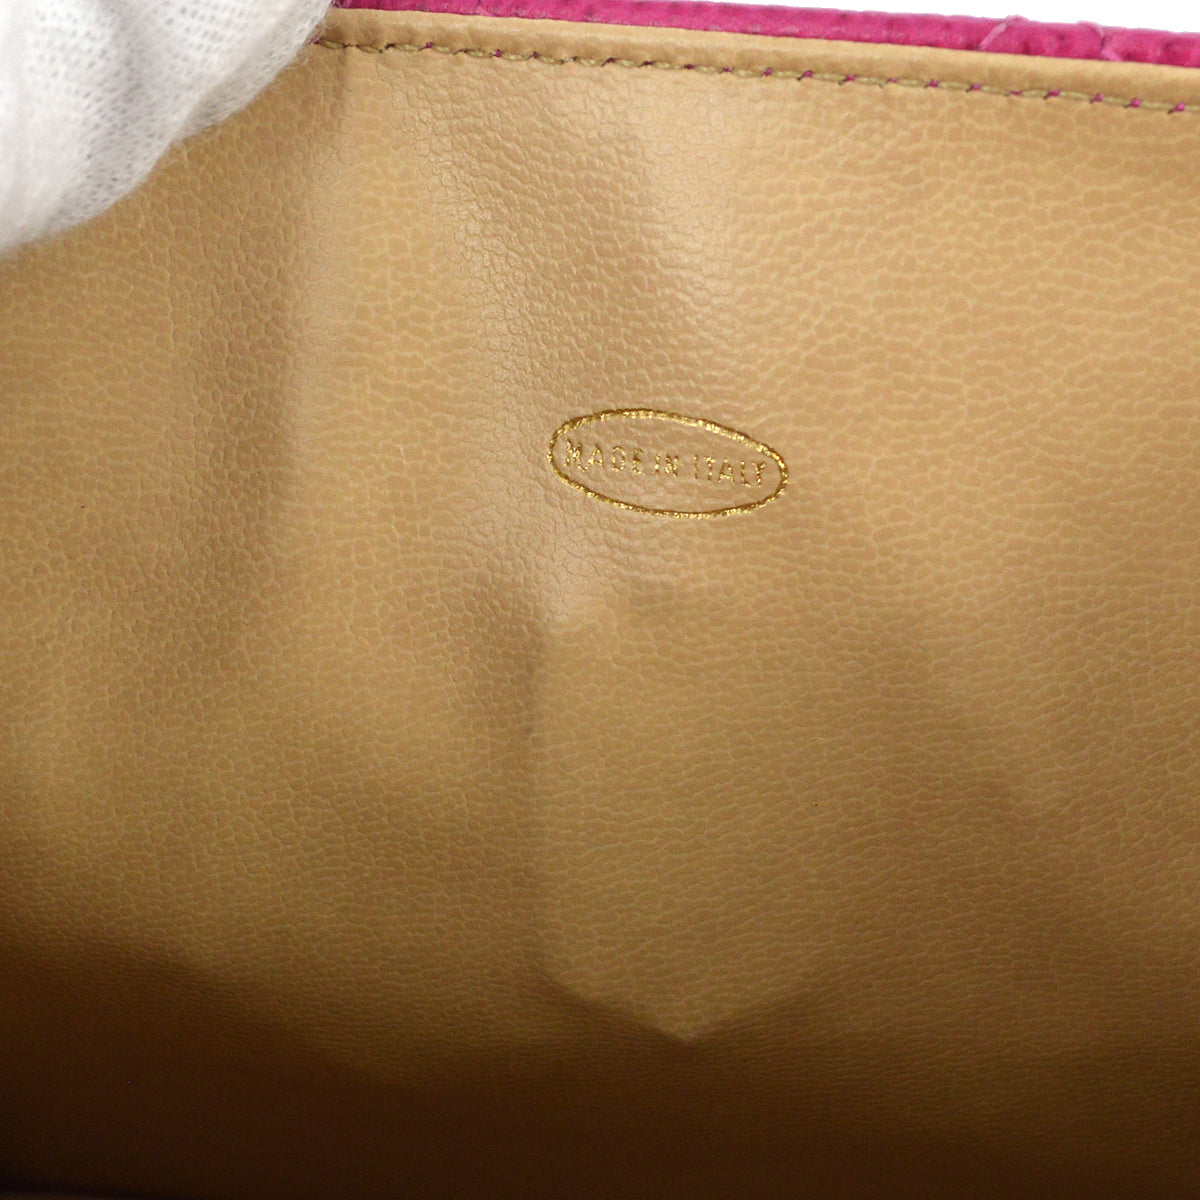 Chanel * 1991-1994 Pink Caviar Mini Straight Flap Bag